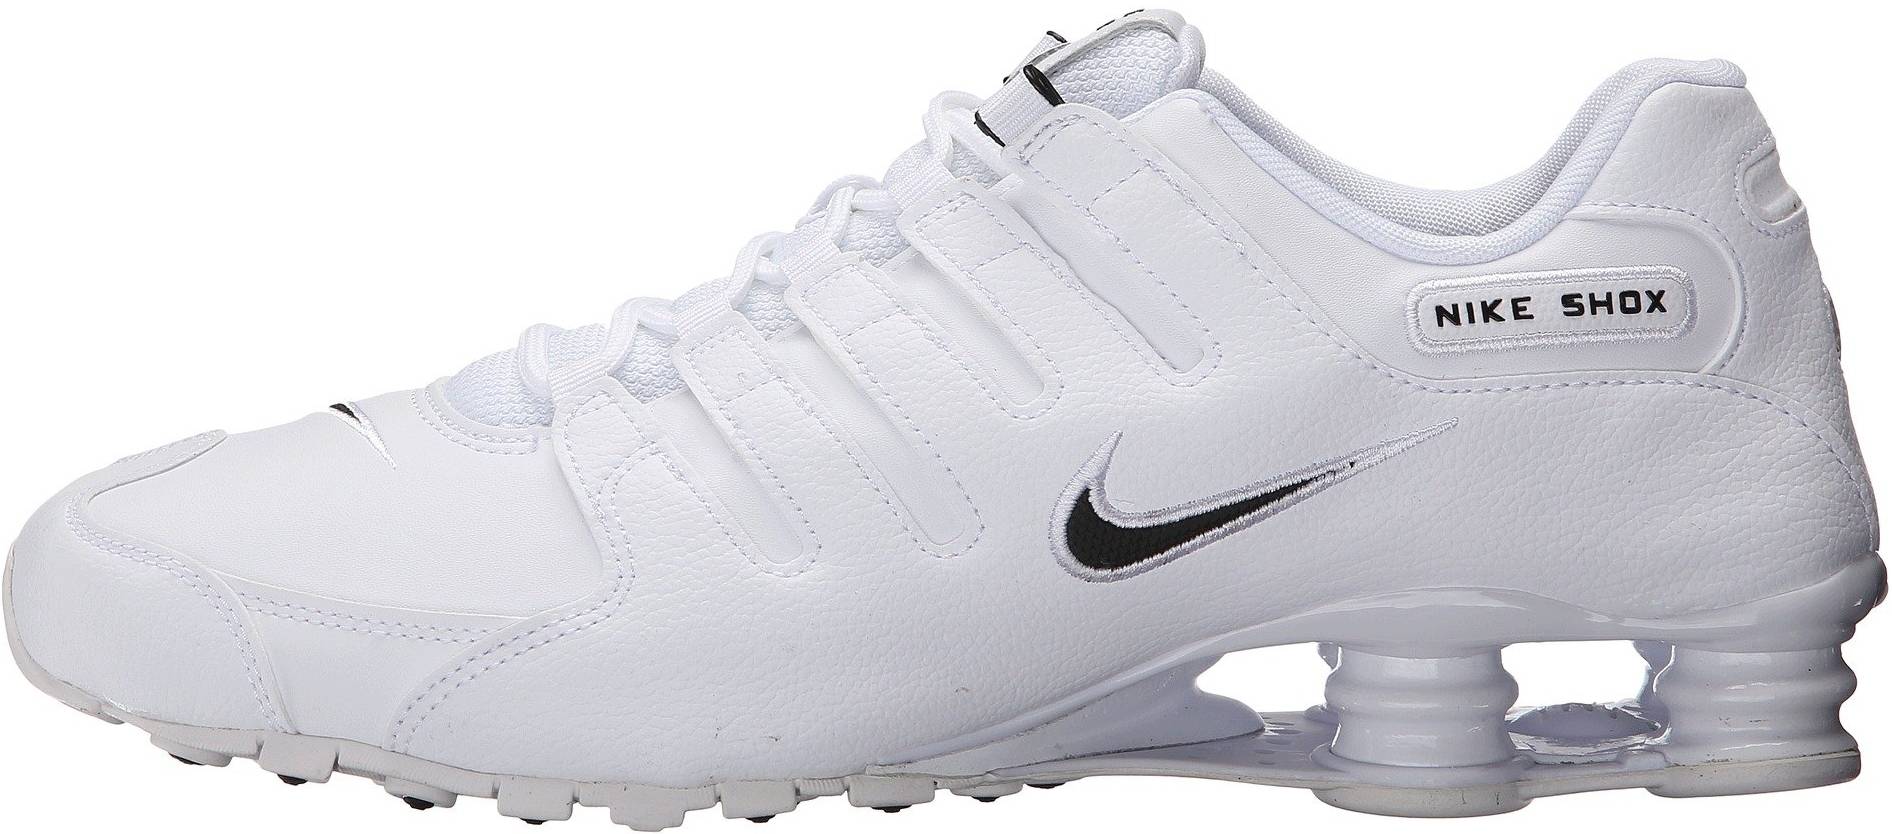 Nike Shox NZ EU sneakers in white (only 